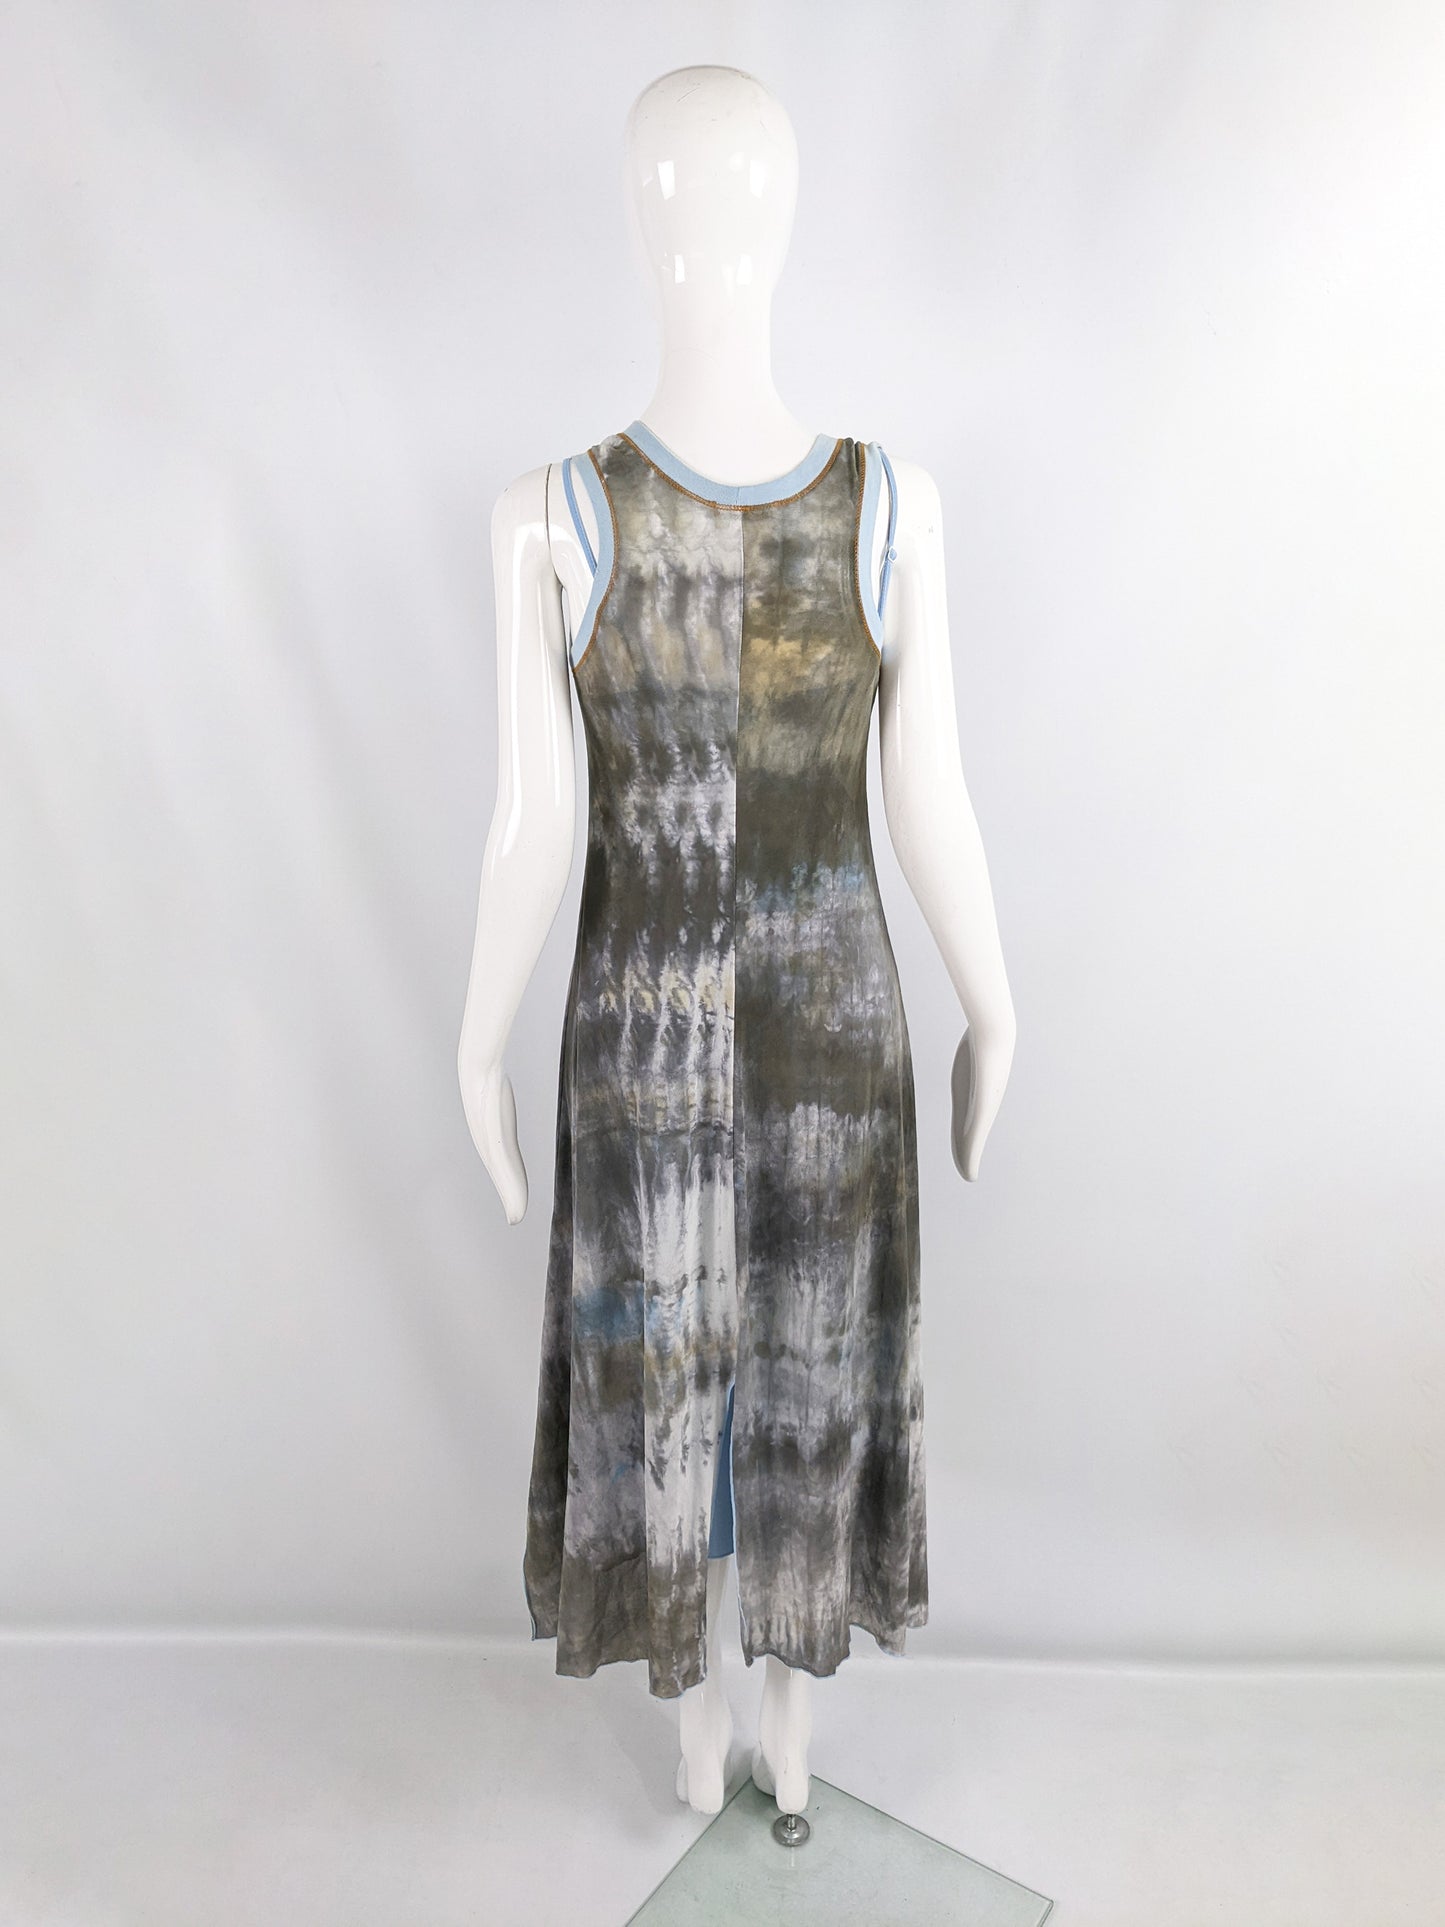 Cop Copine Vintage Mesh Two Piece Tie Dye Print Slip Dress, 1990s